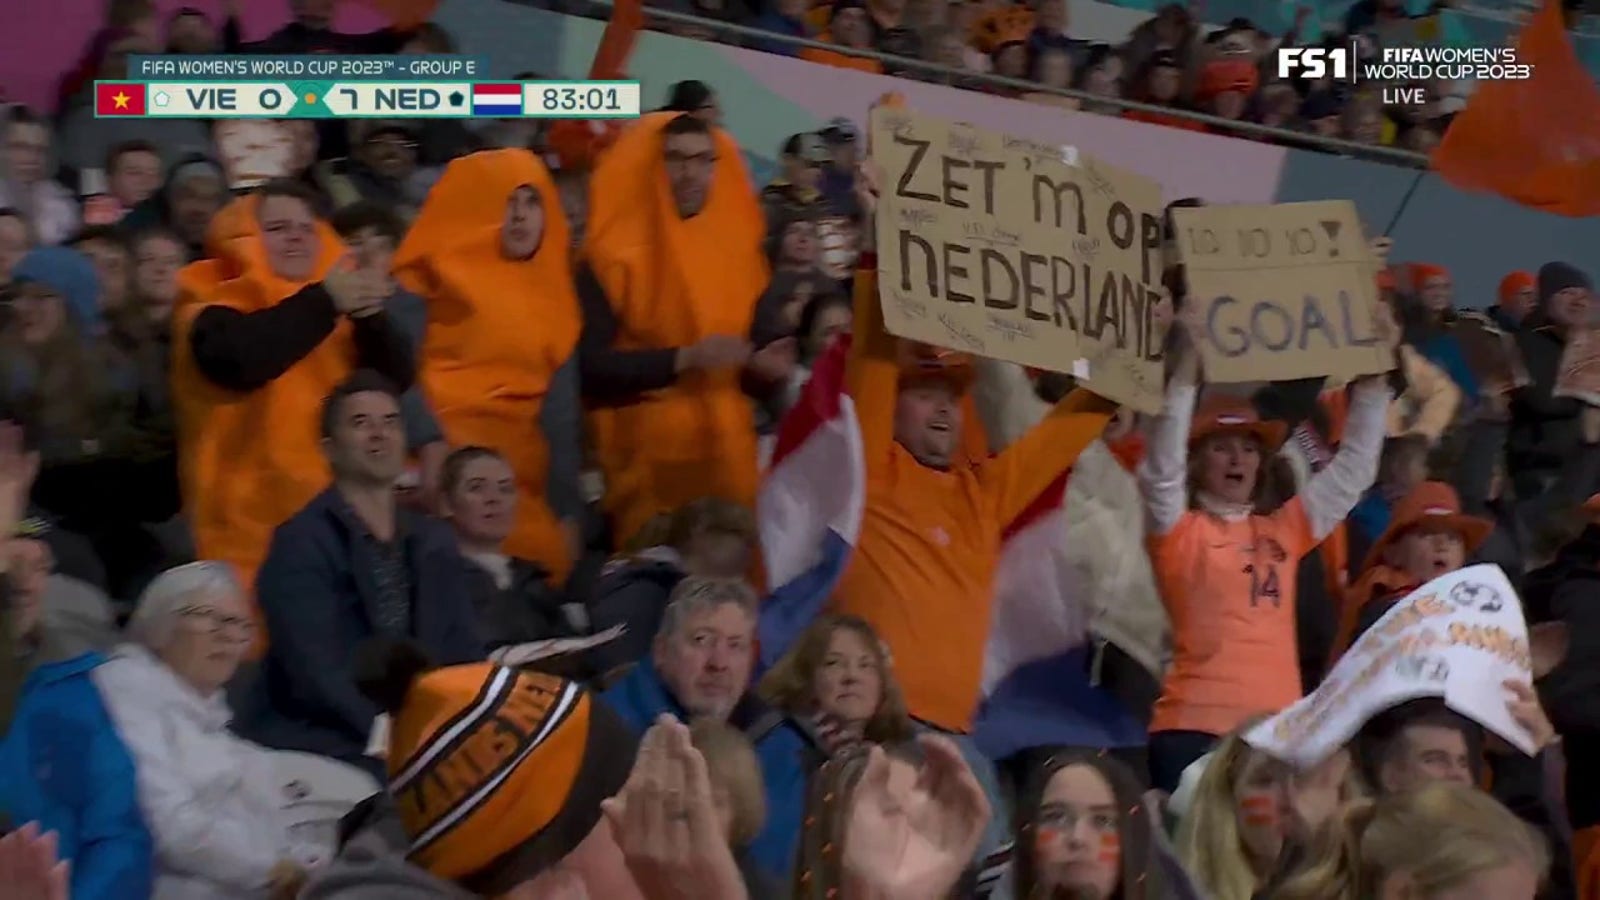 Netherlands' Jill Roord scores goal vs. Vietnam in 83'